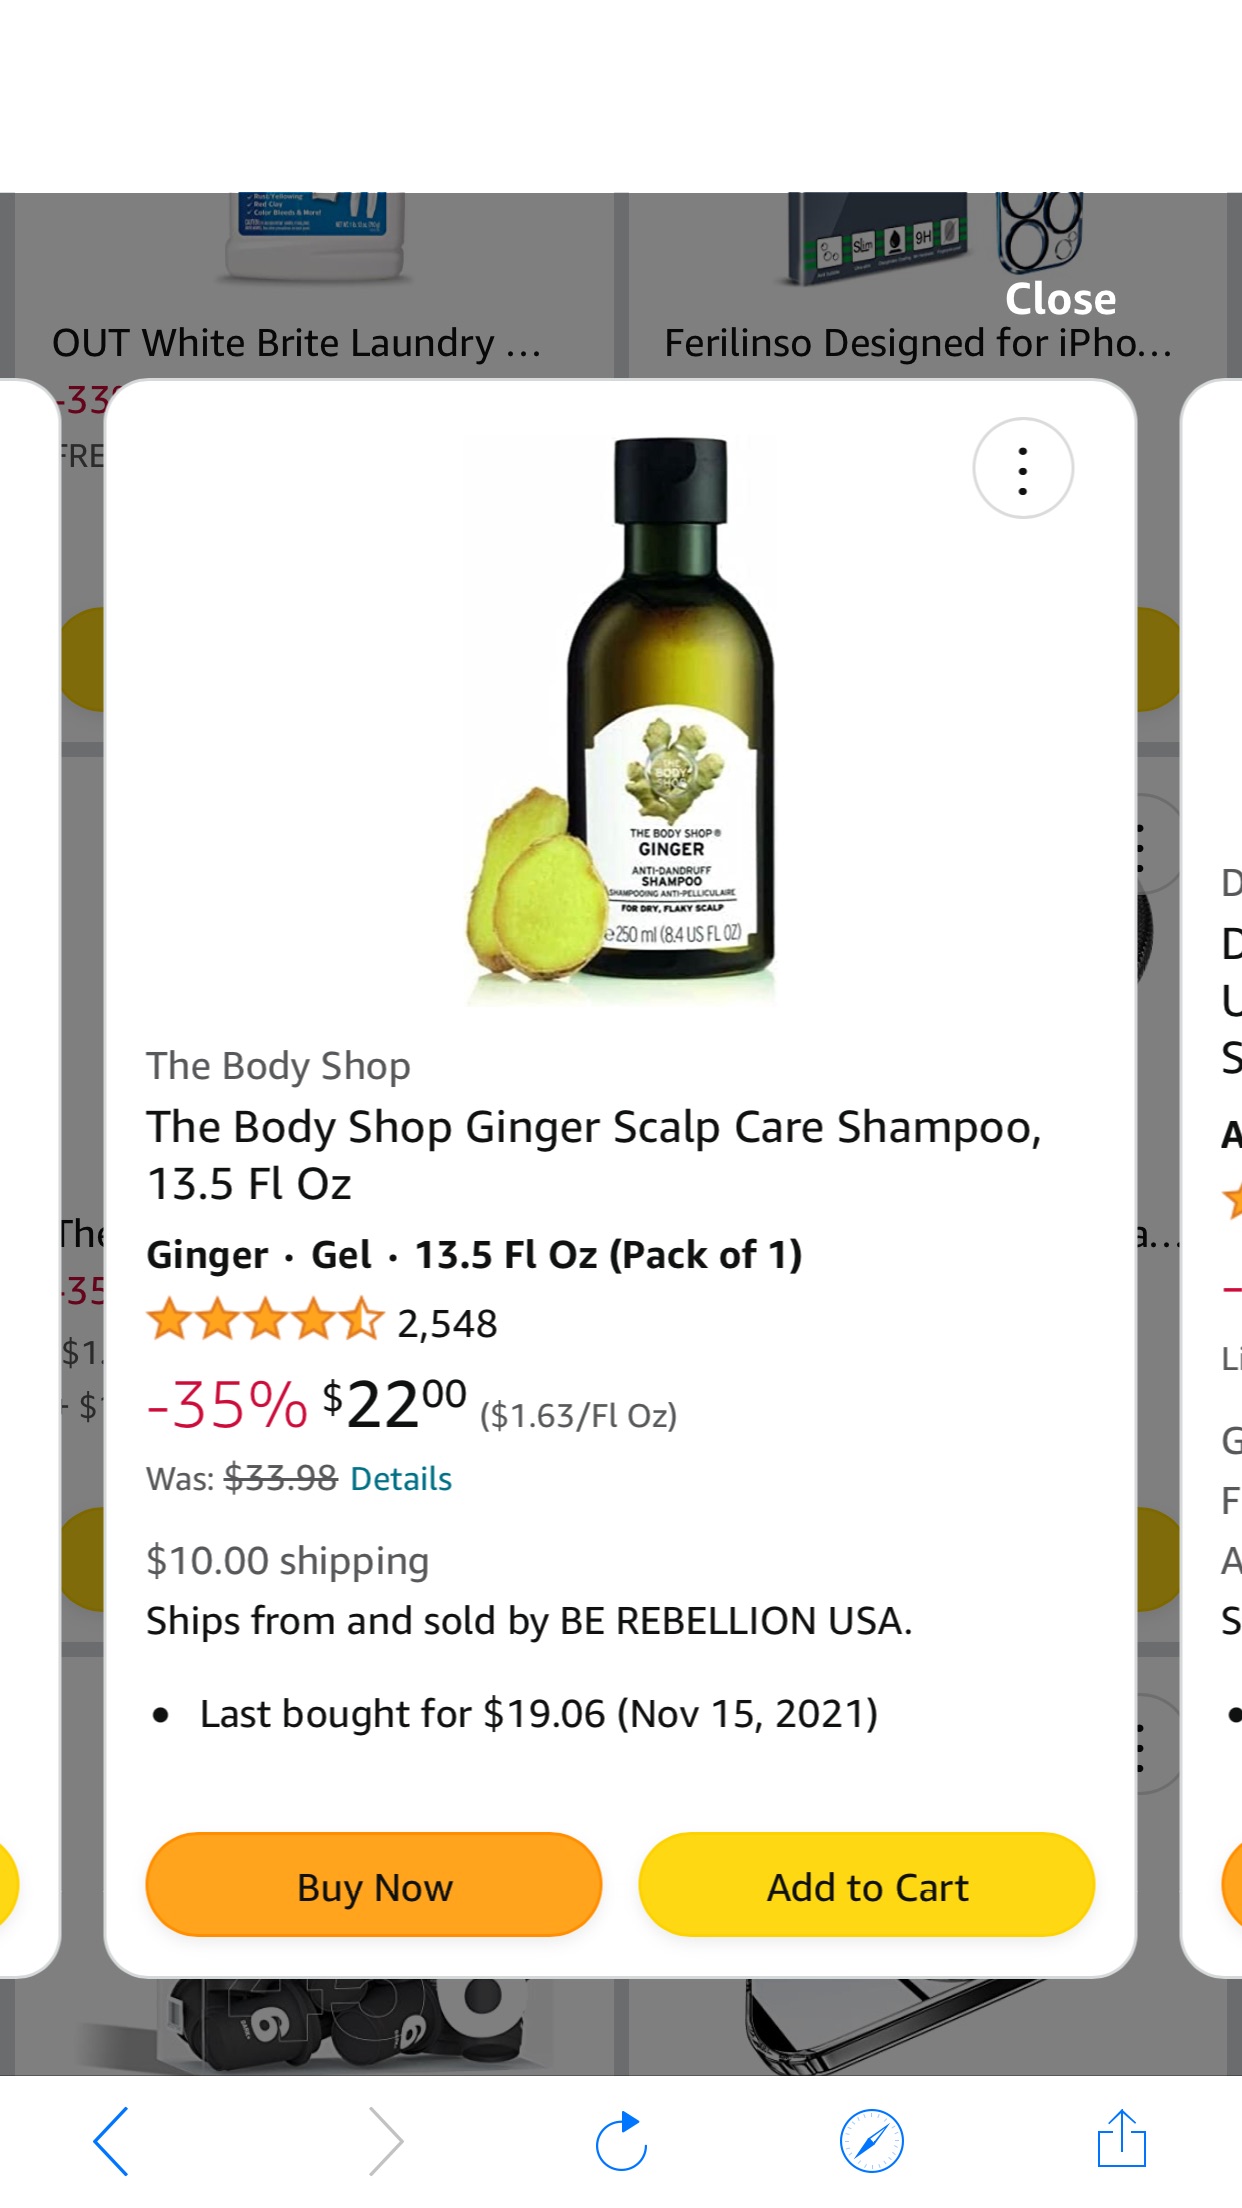 The Body Shop Ginger Scalp Care Shampoo, 13.5 Fl Oz